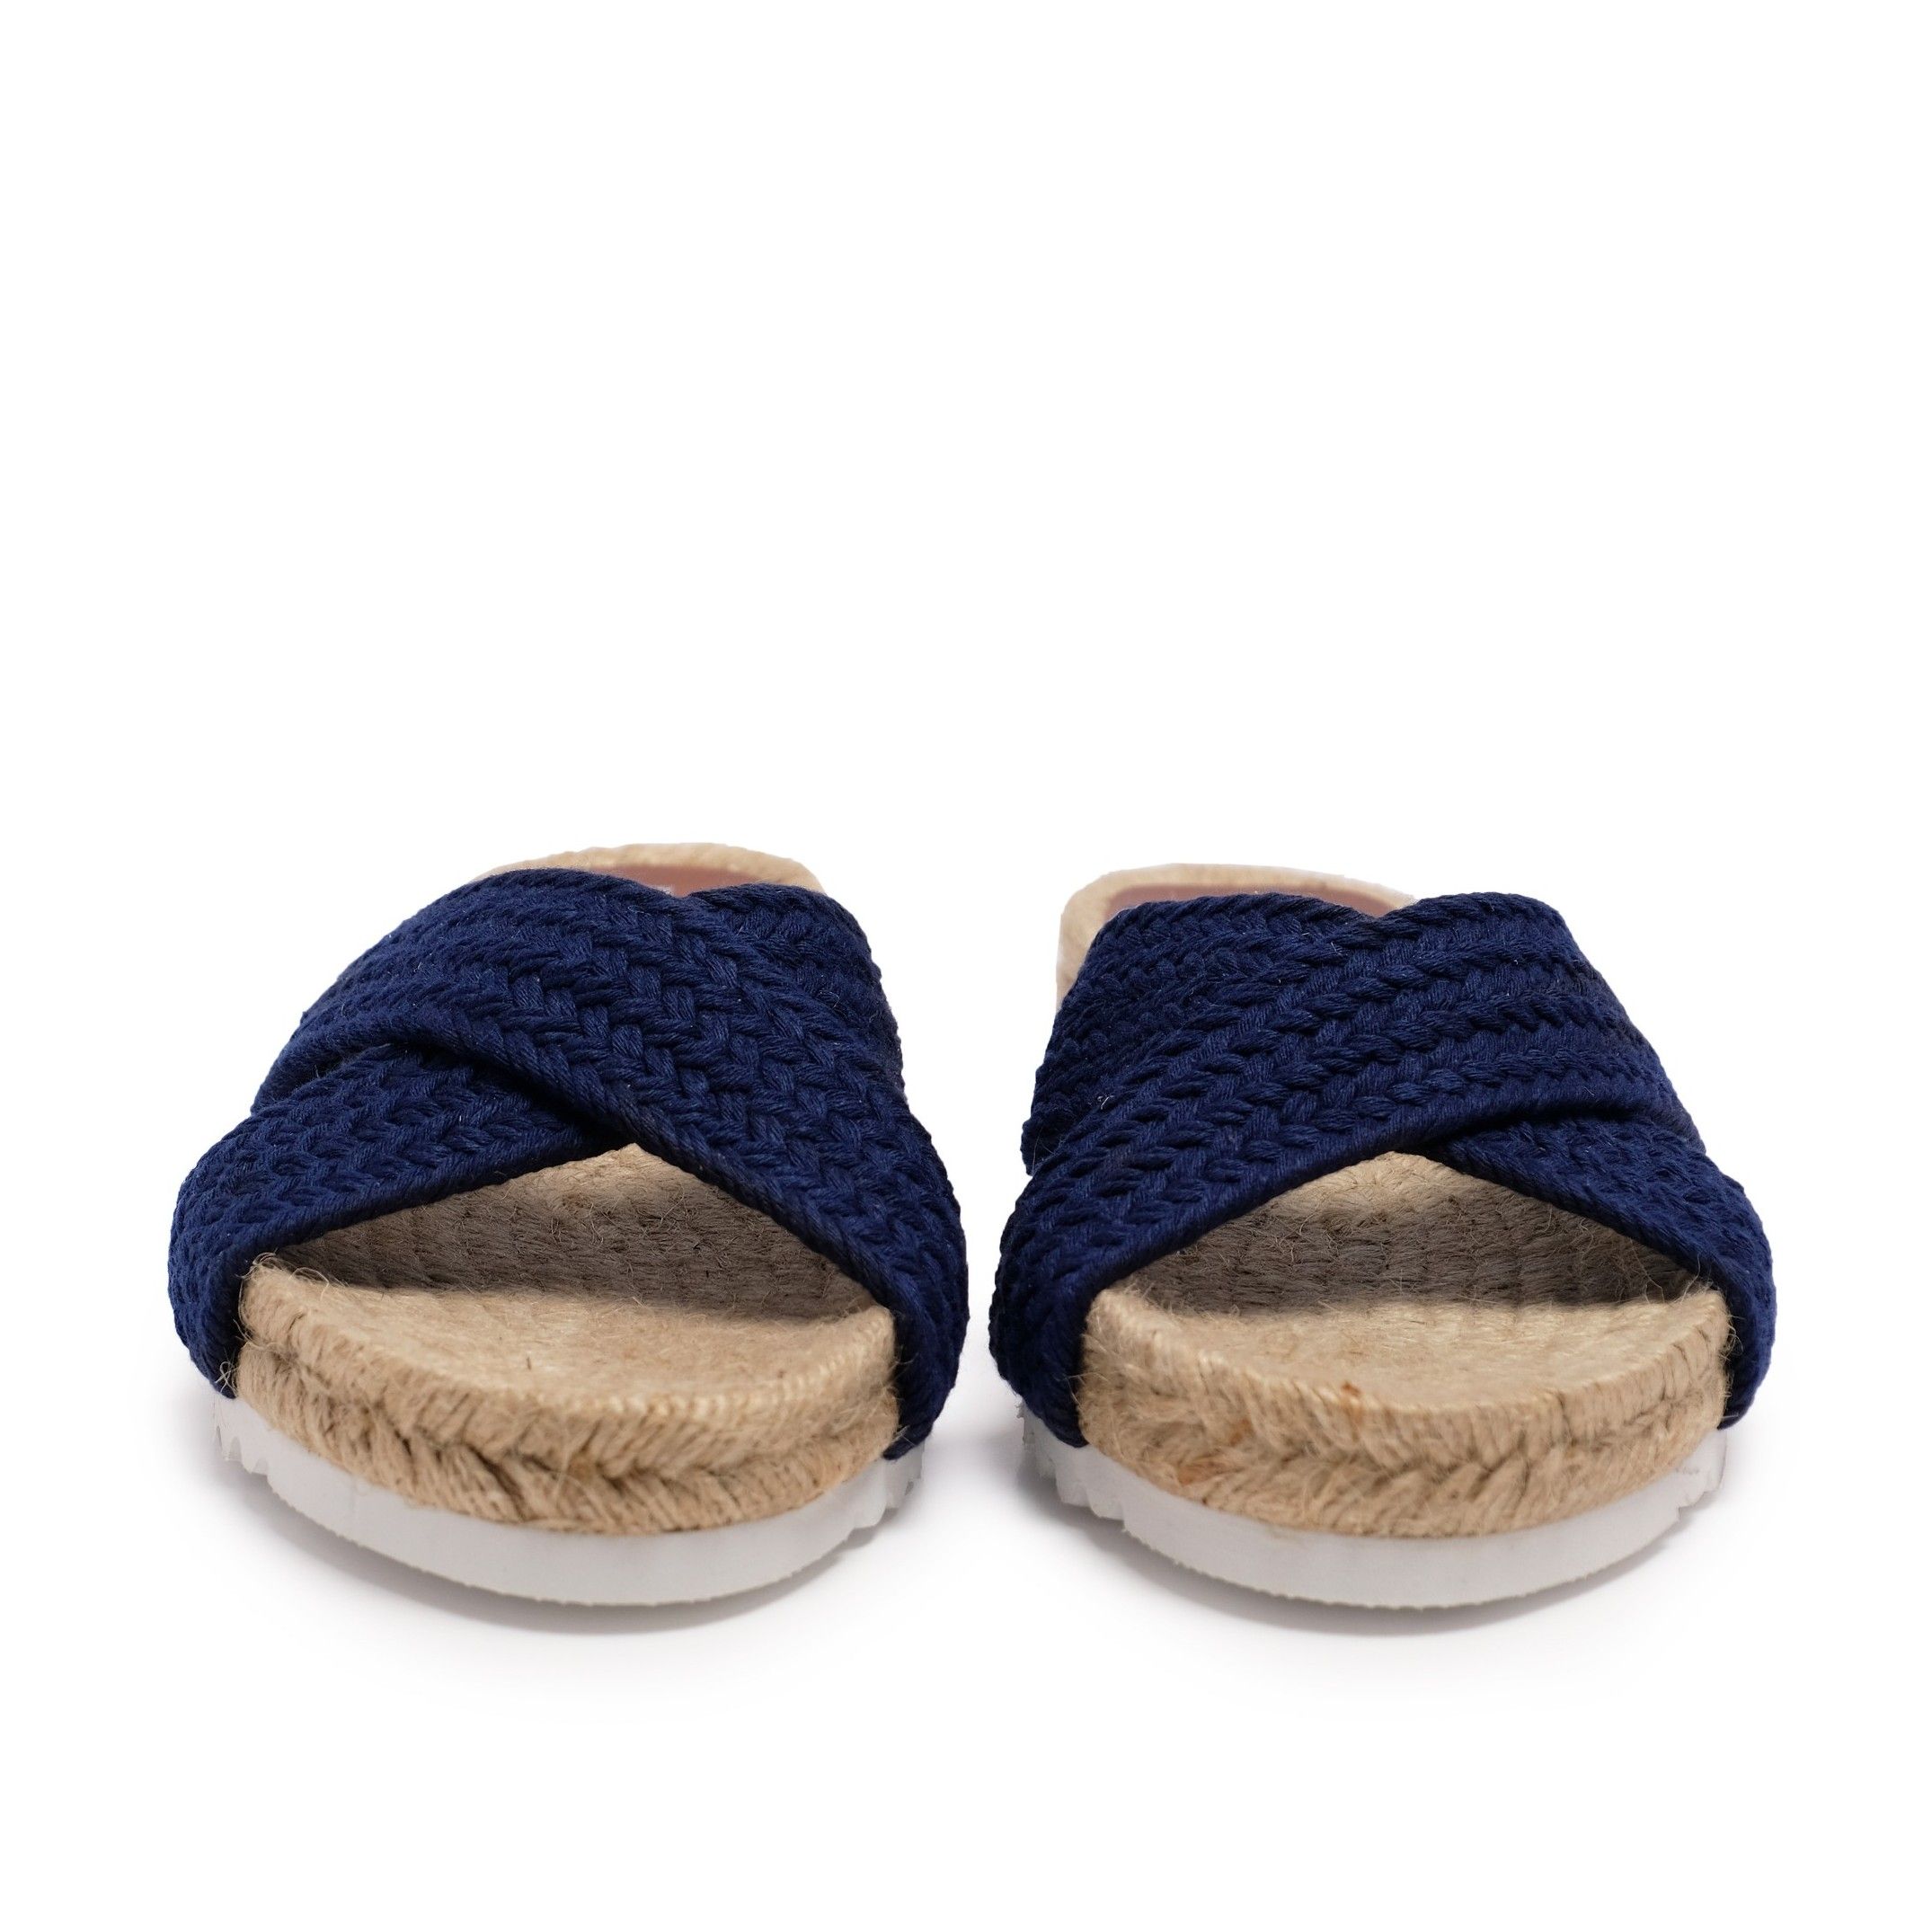 Flat Yute Sandal for Women Navy blue Shoes Eva Lopez